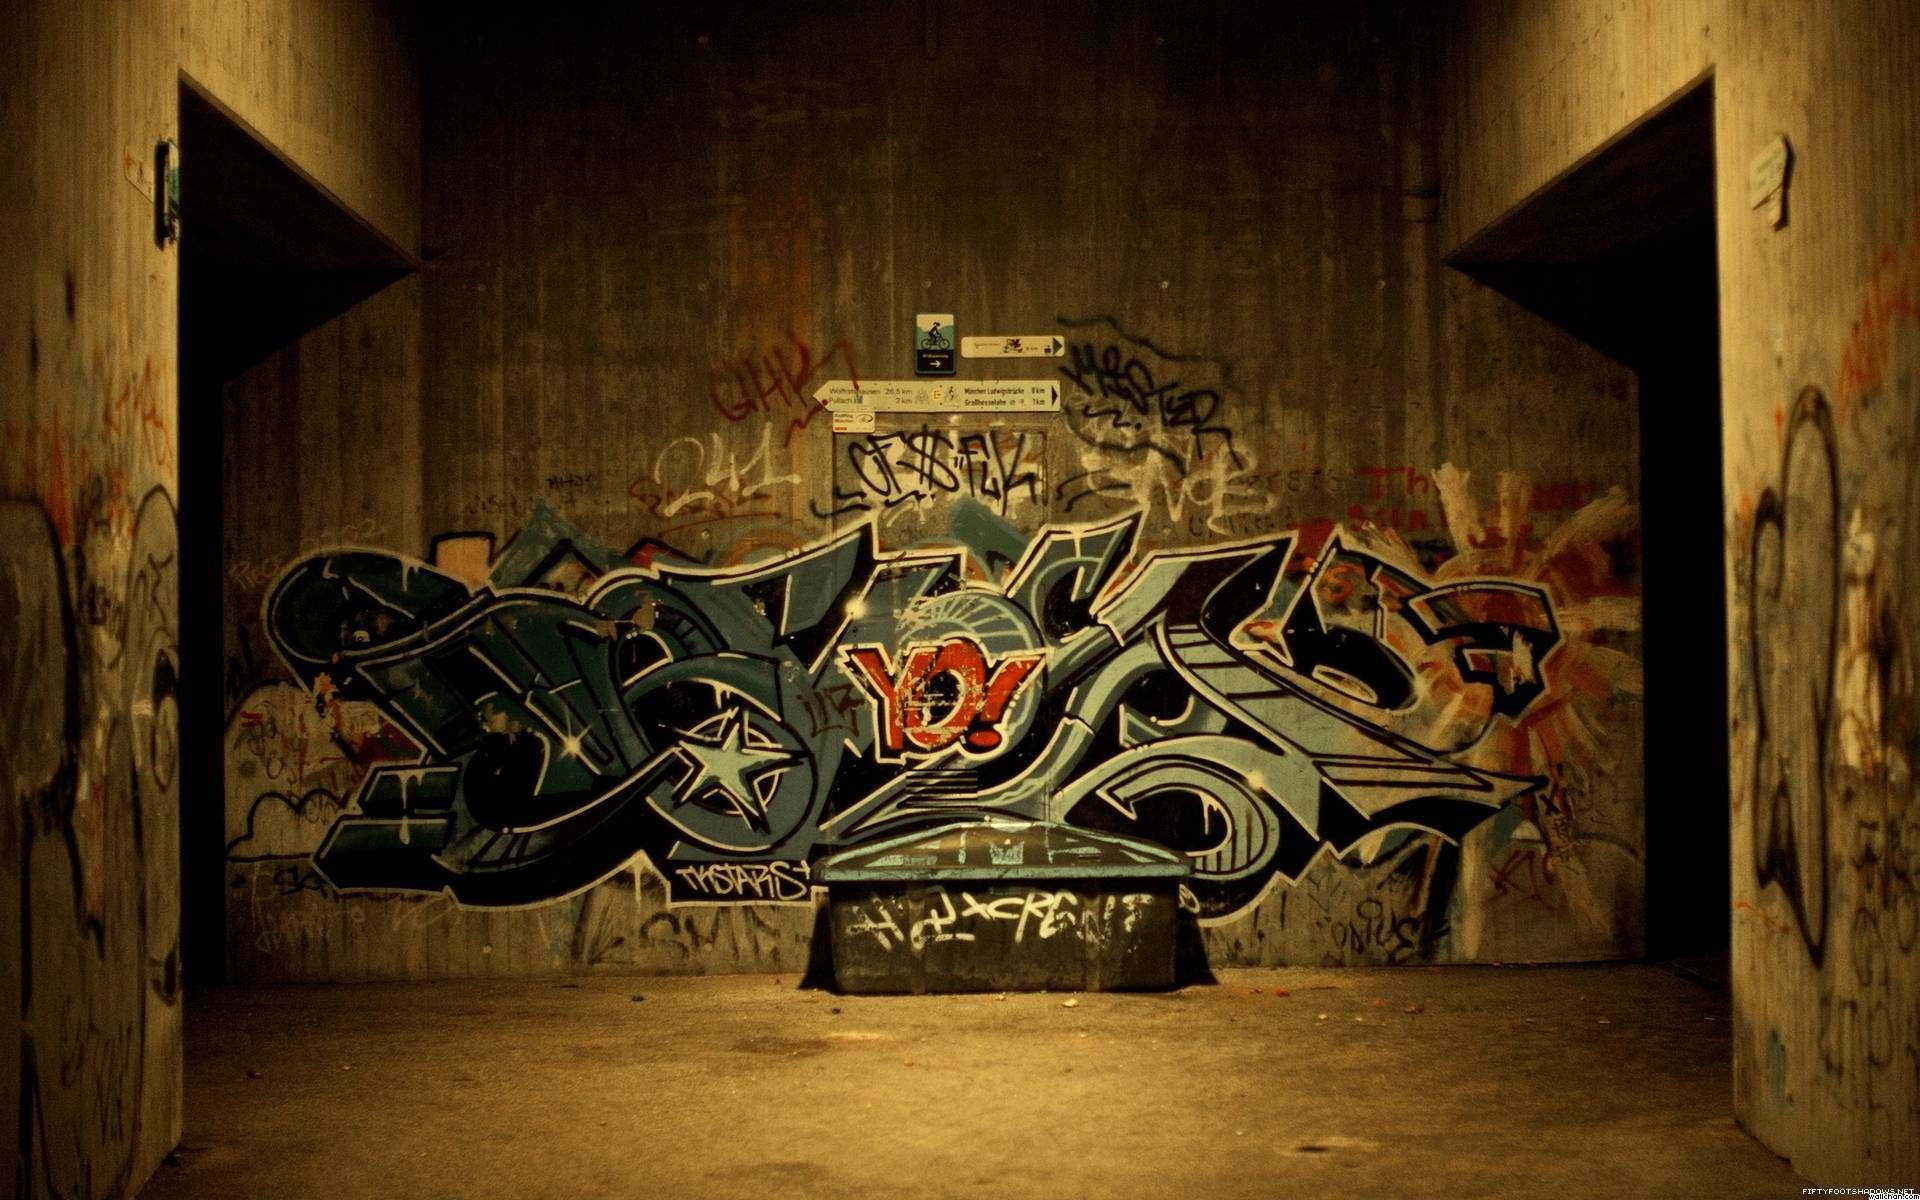 Underground Urban Art Graffiti Wallpaper